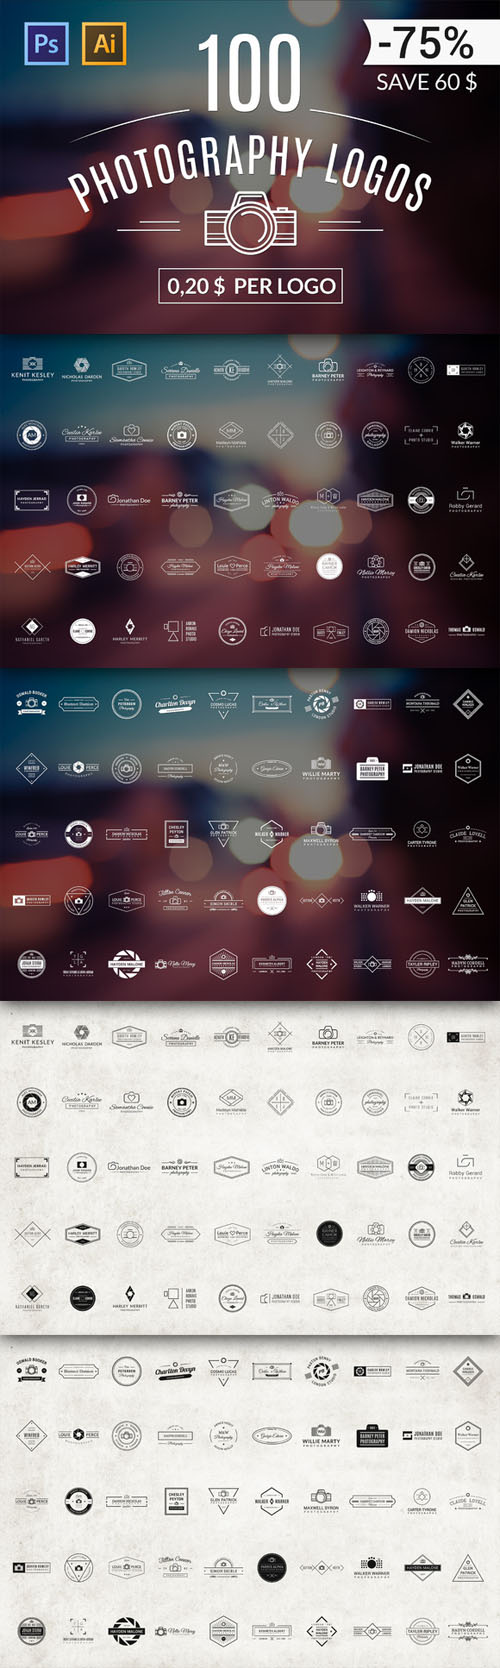 100 Photography Logos - All Volumes - Creativemarket 70379